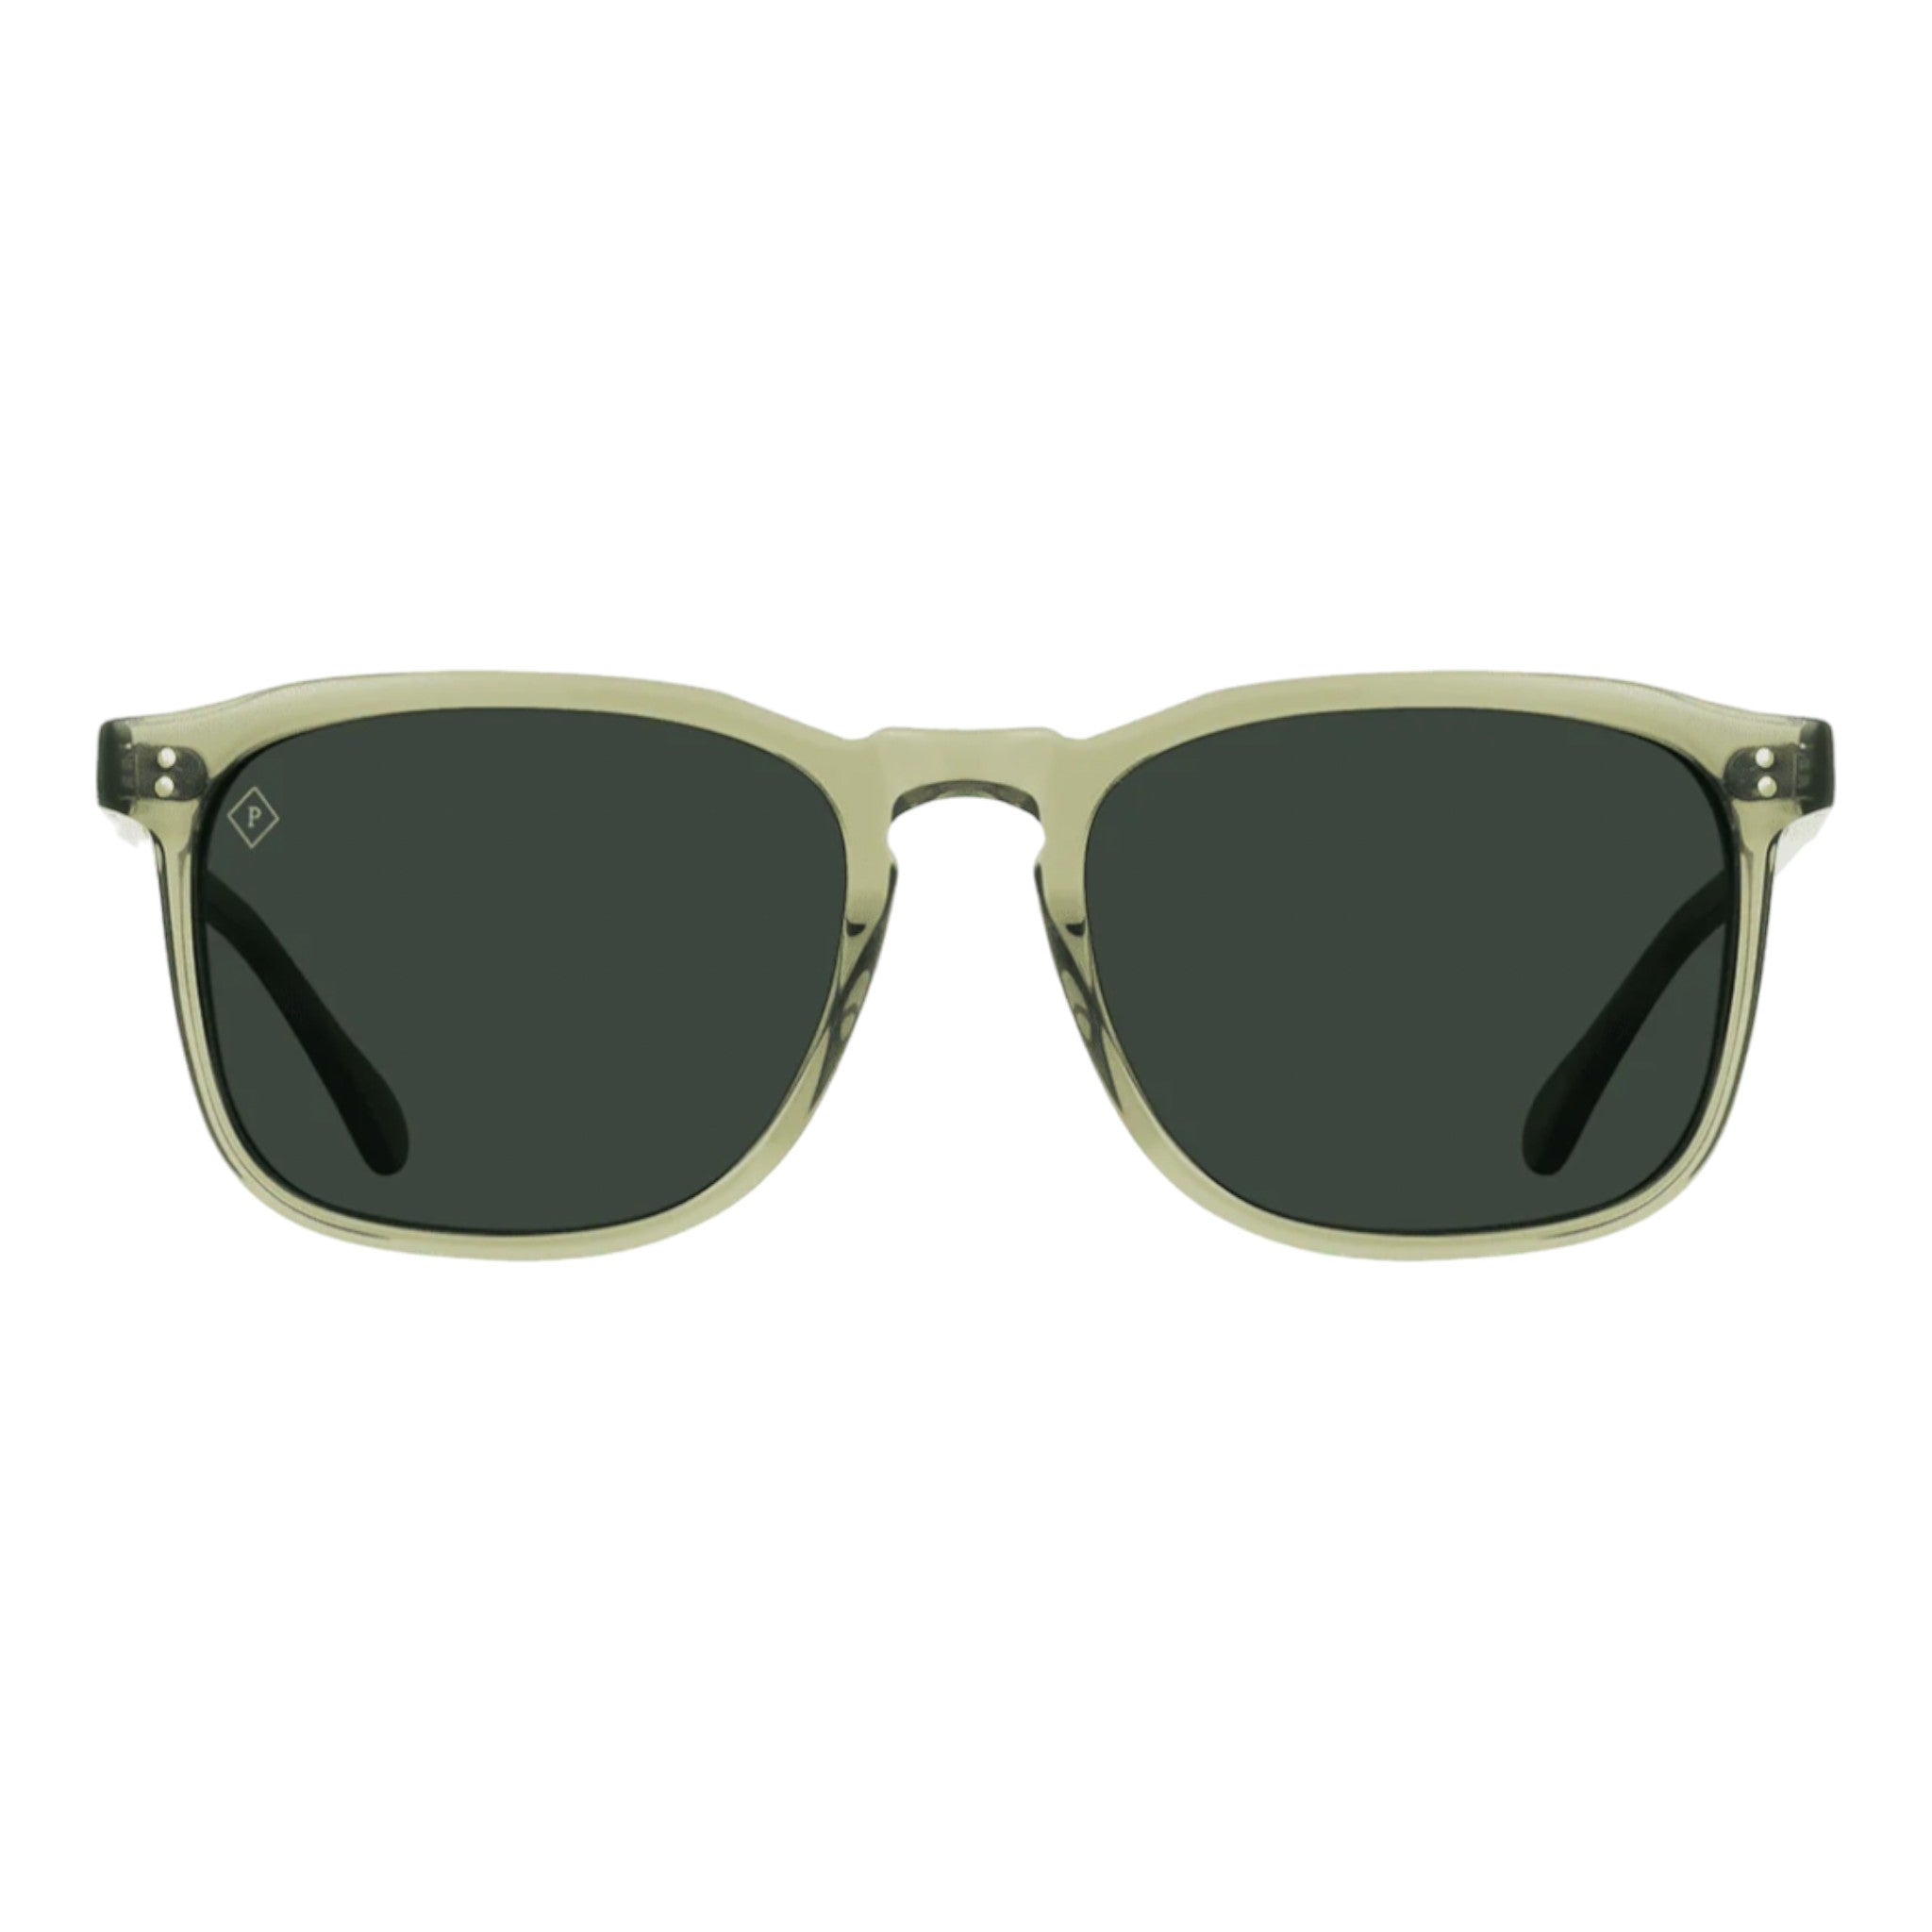 Raen - Wiley 54 Sunglasses - Cambria / Green Polarized